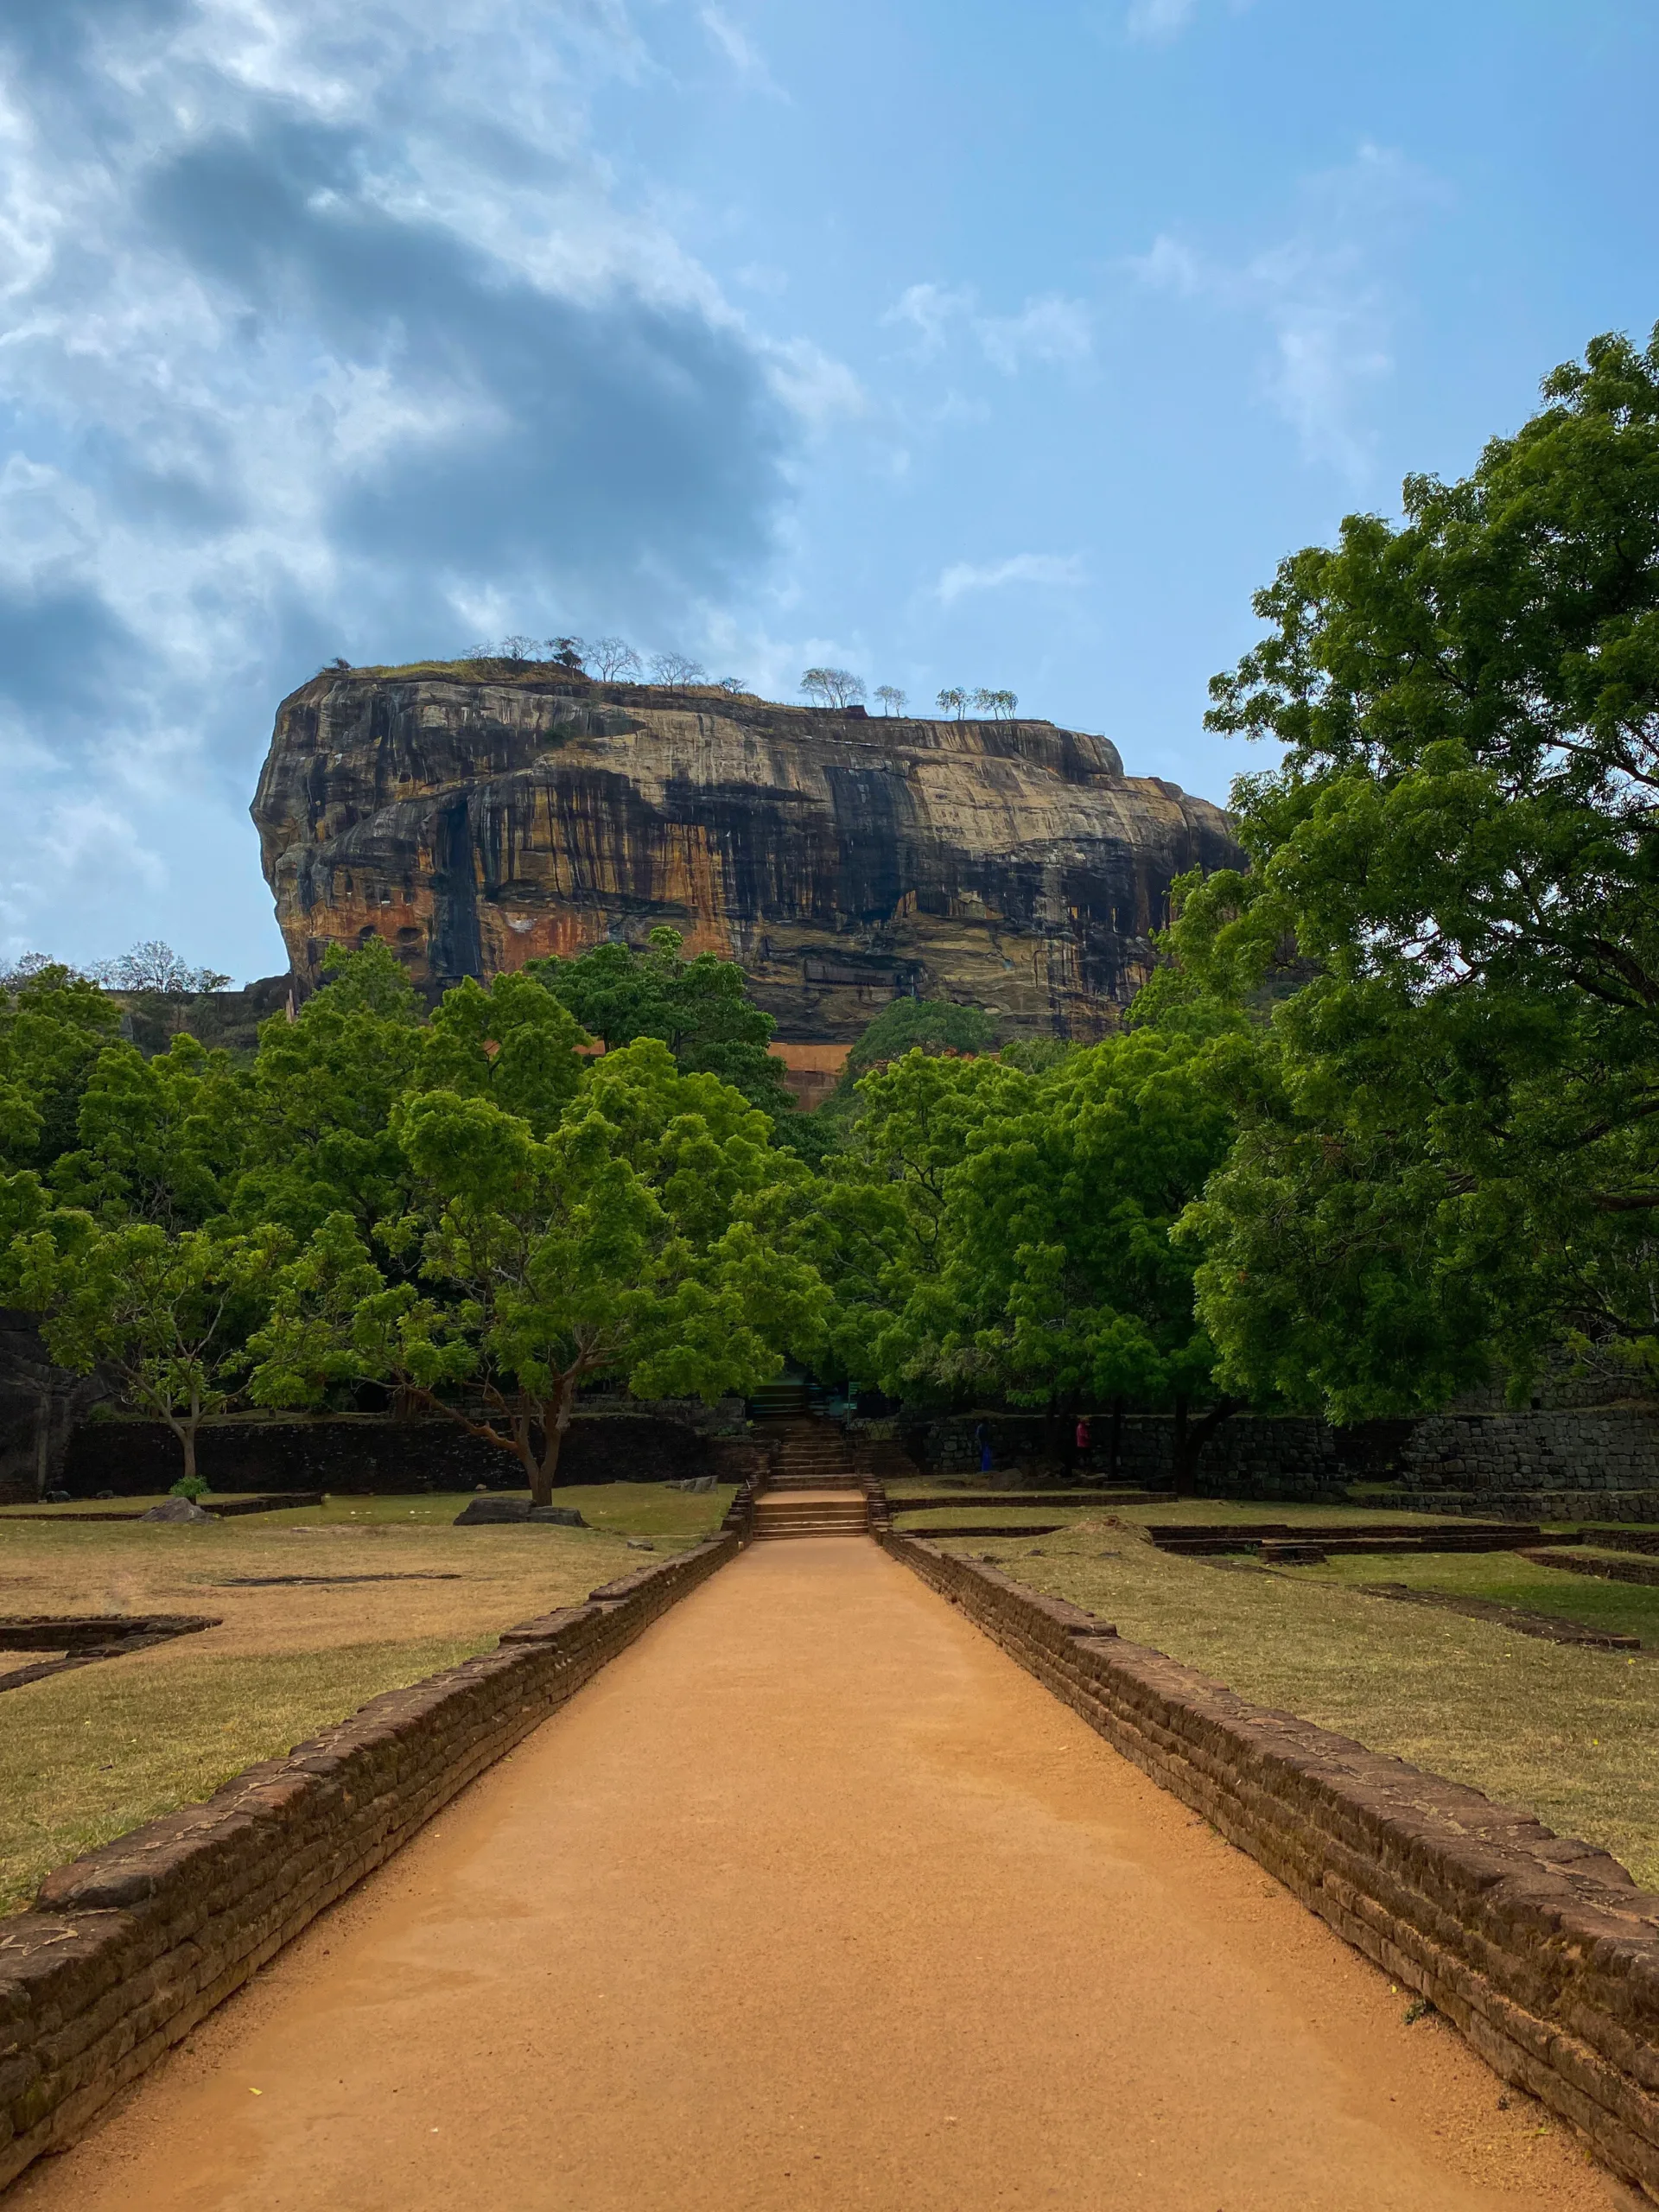 Sigiriya or Lion's Rock in Sri Lanka